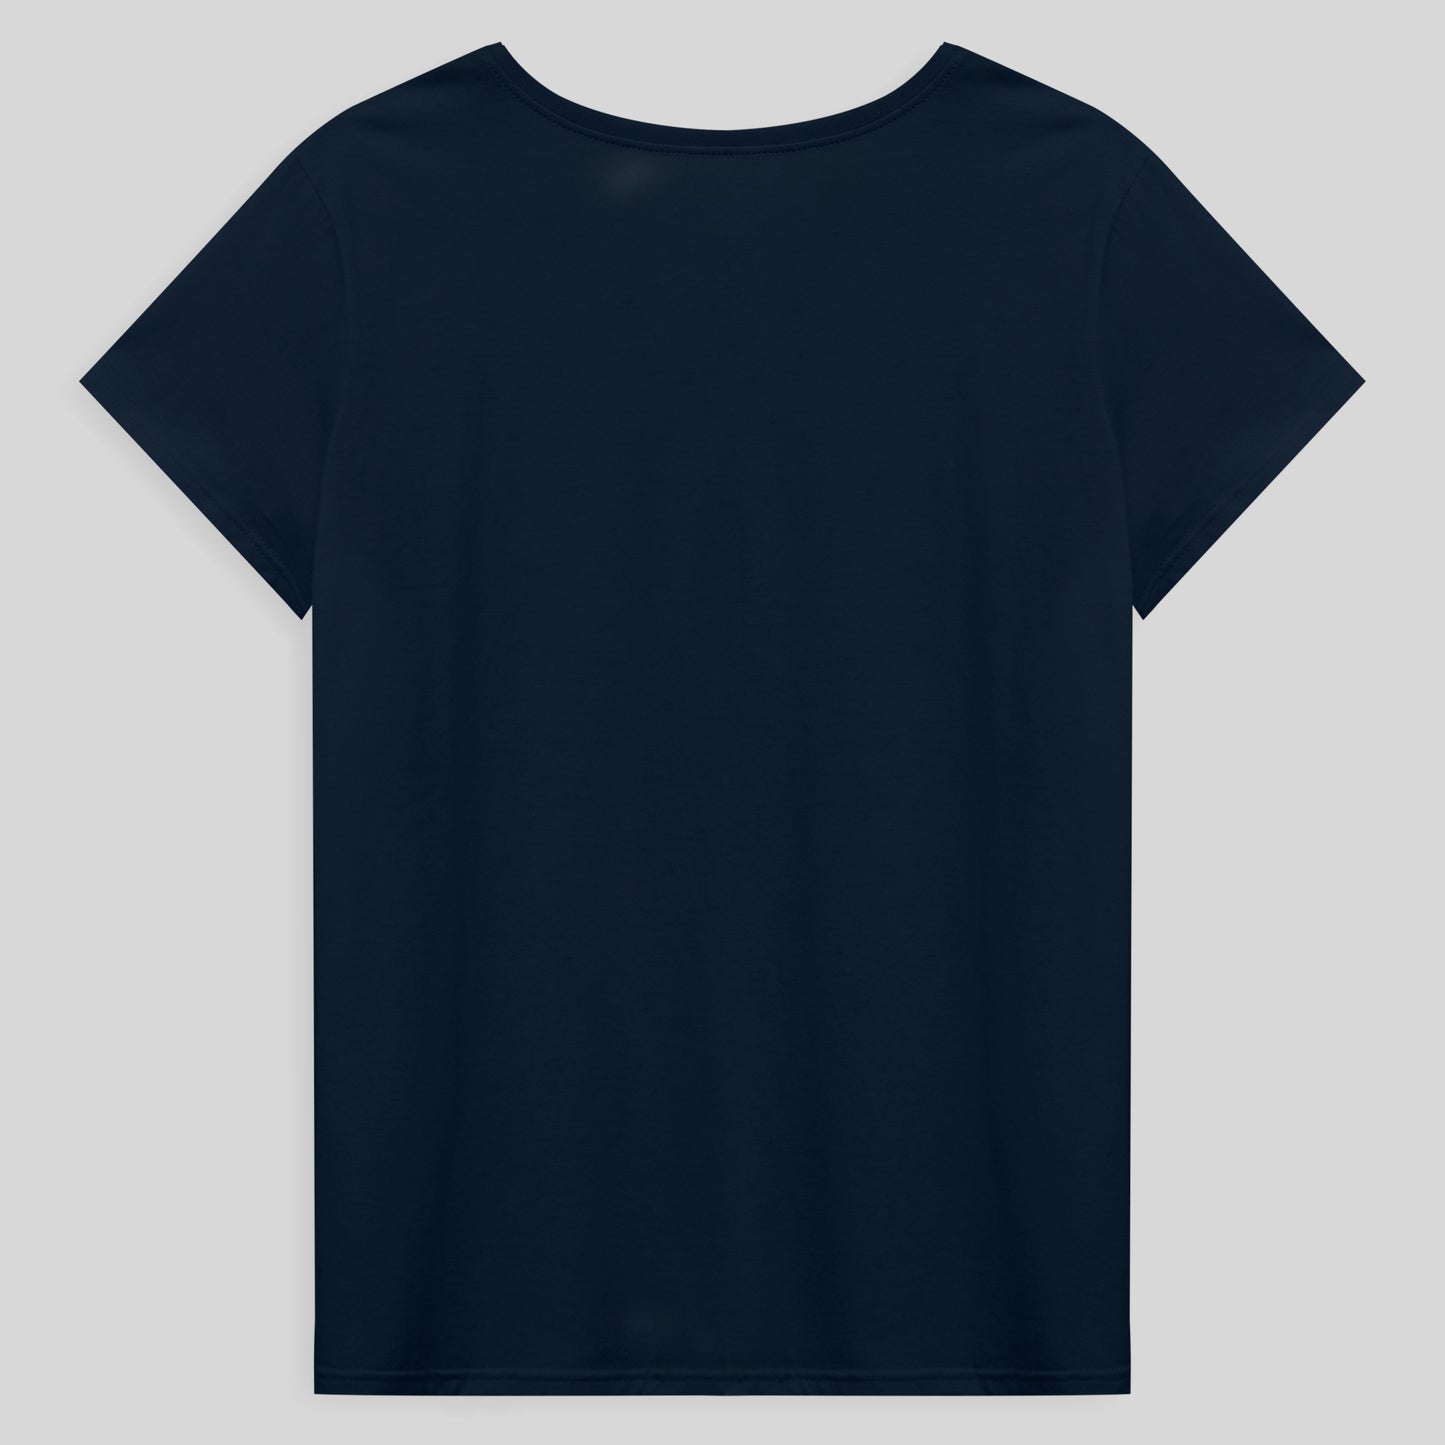 Camiseta Básica Gola V Plus Feminina - Azul Marinho